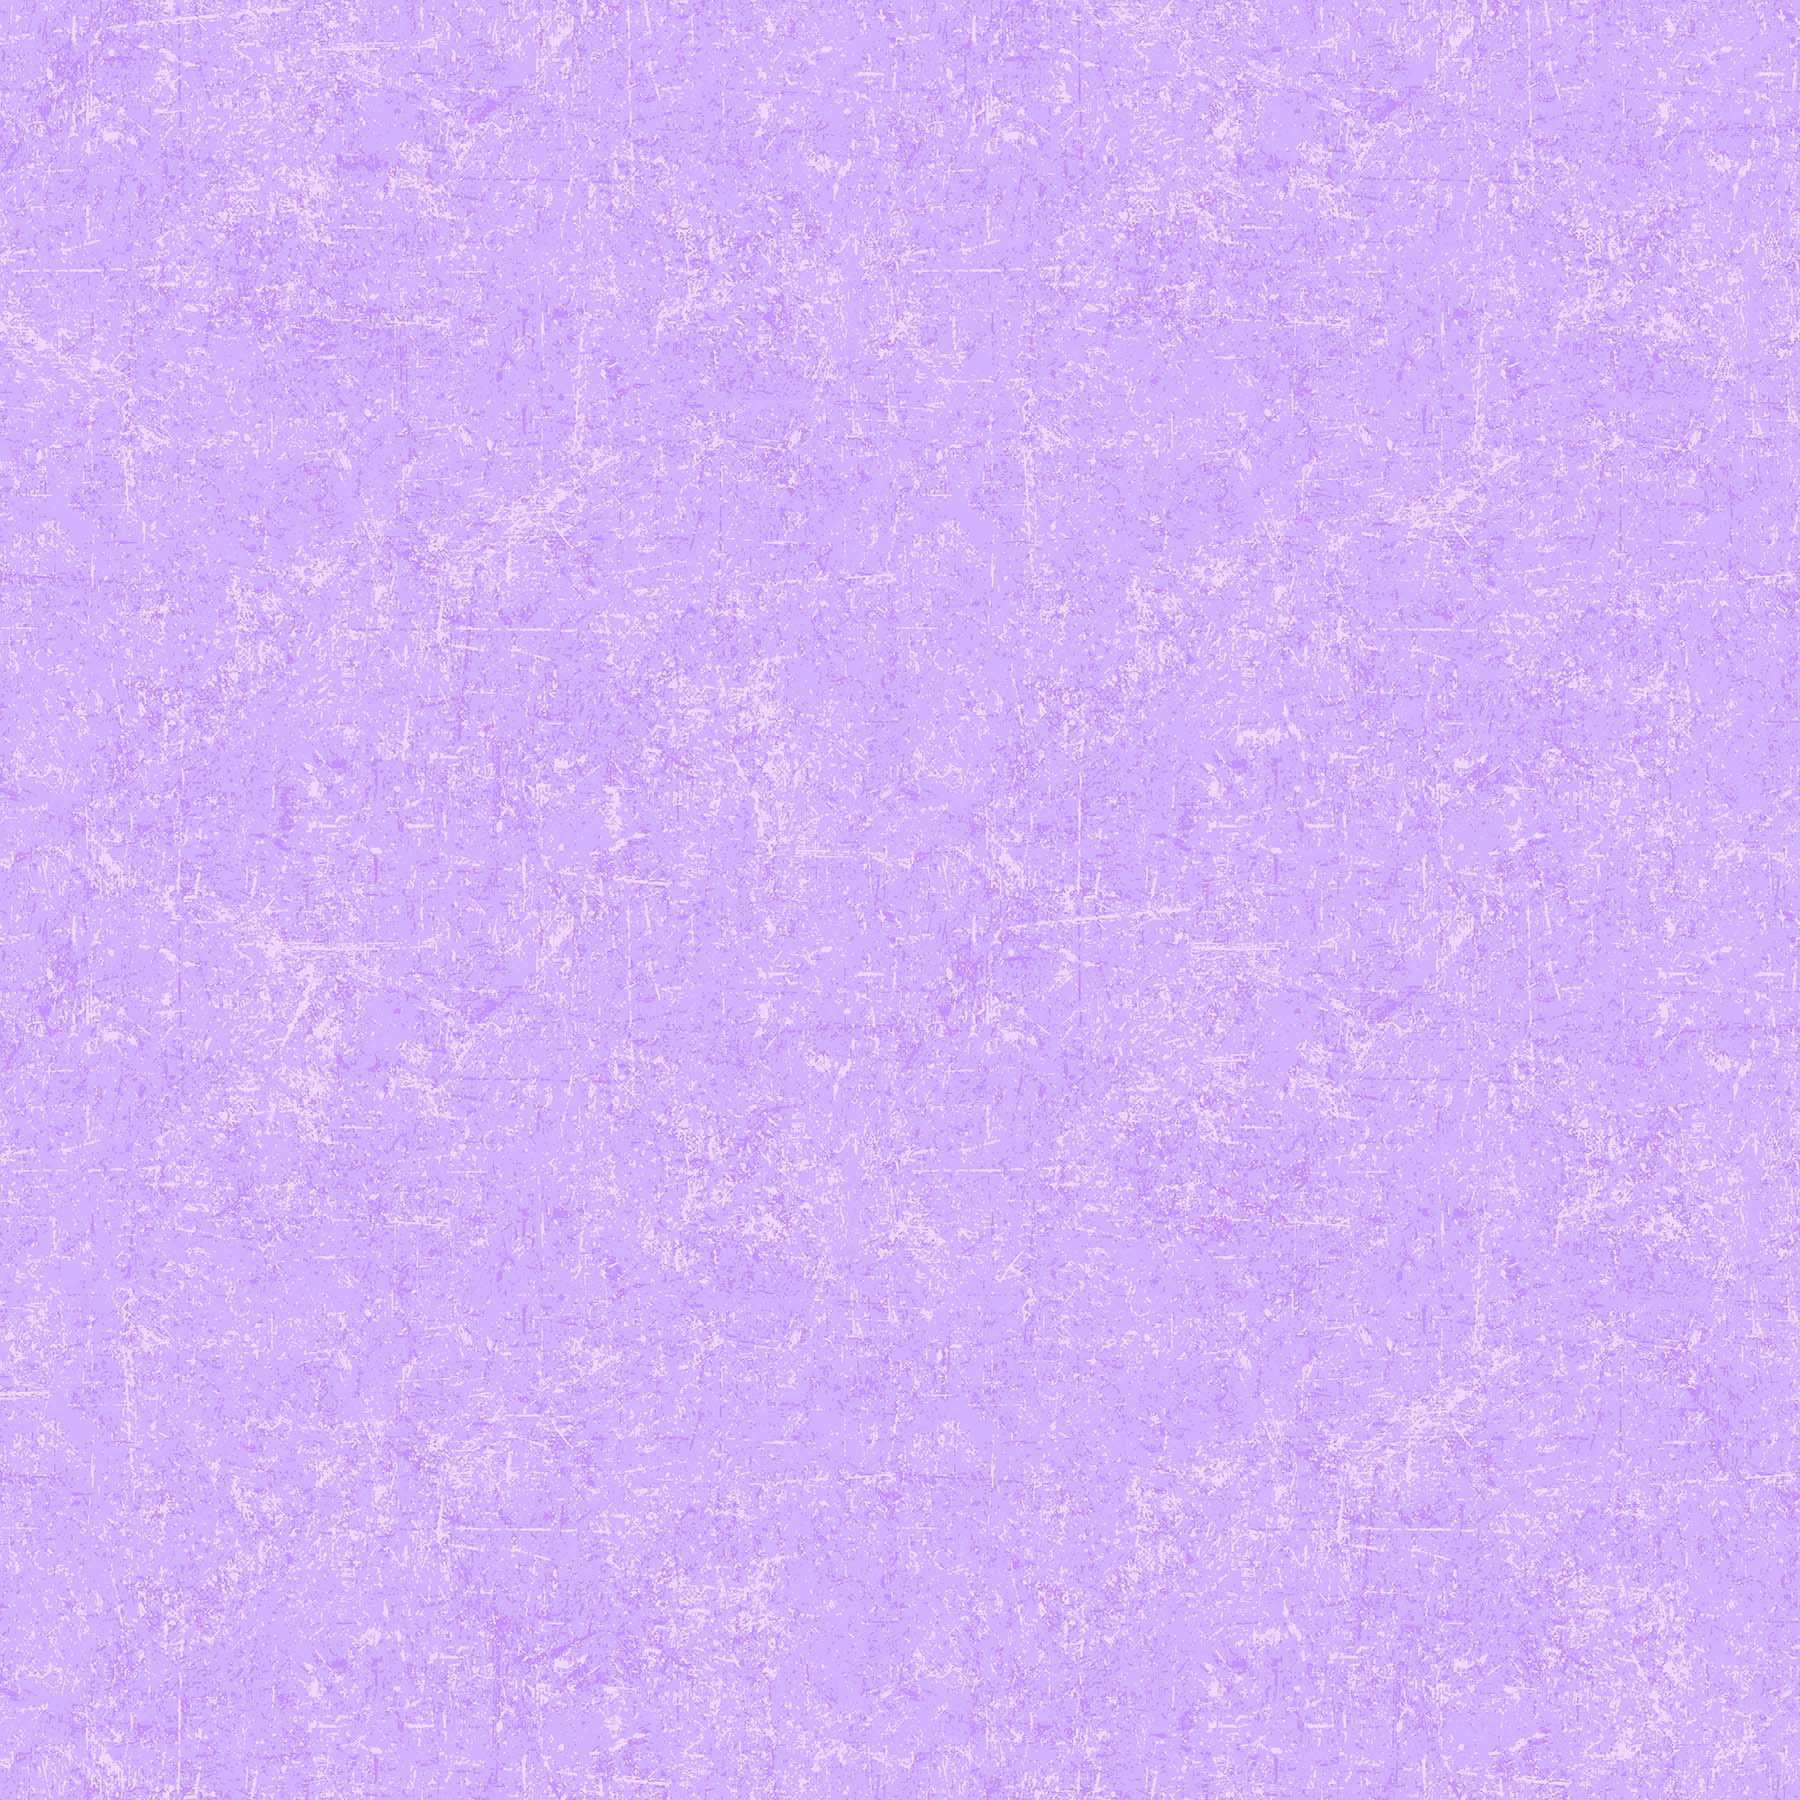 Glisten Sorbet Quilt Fabric - Blender in Berry Purple - P10091-83